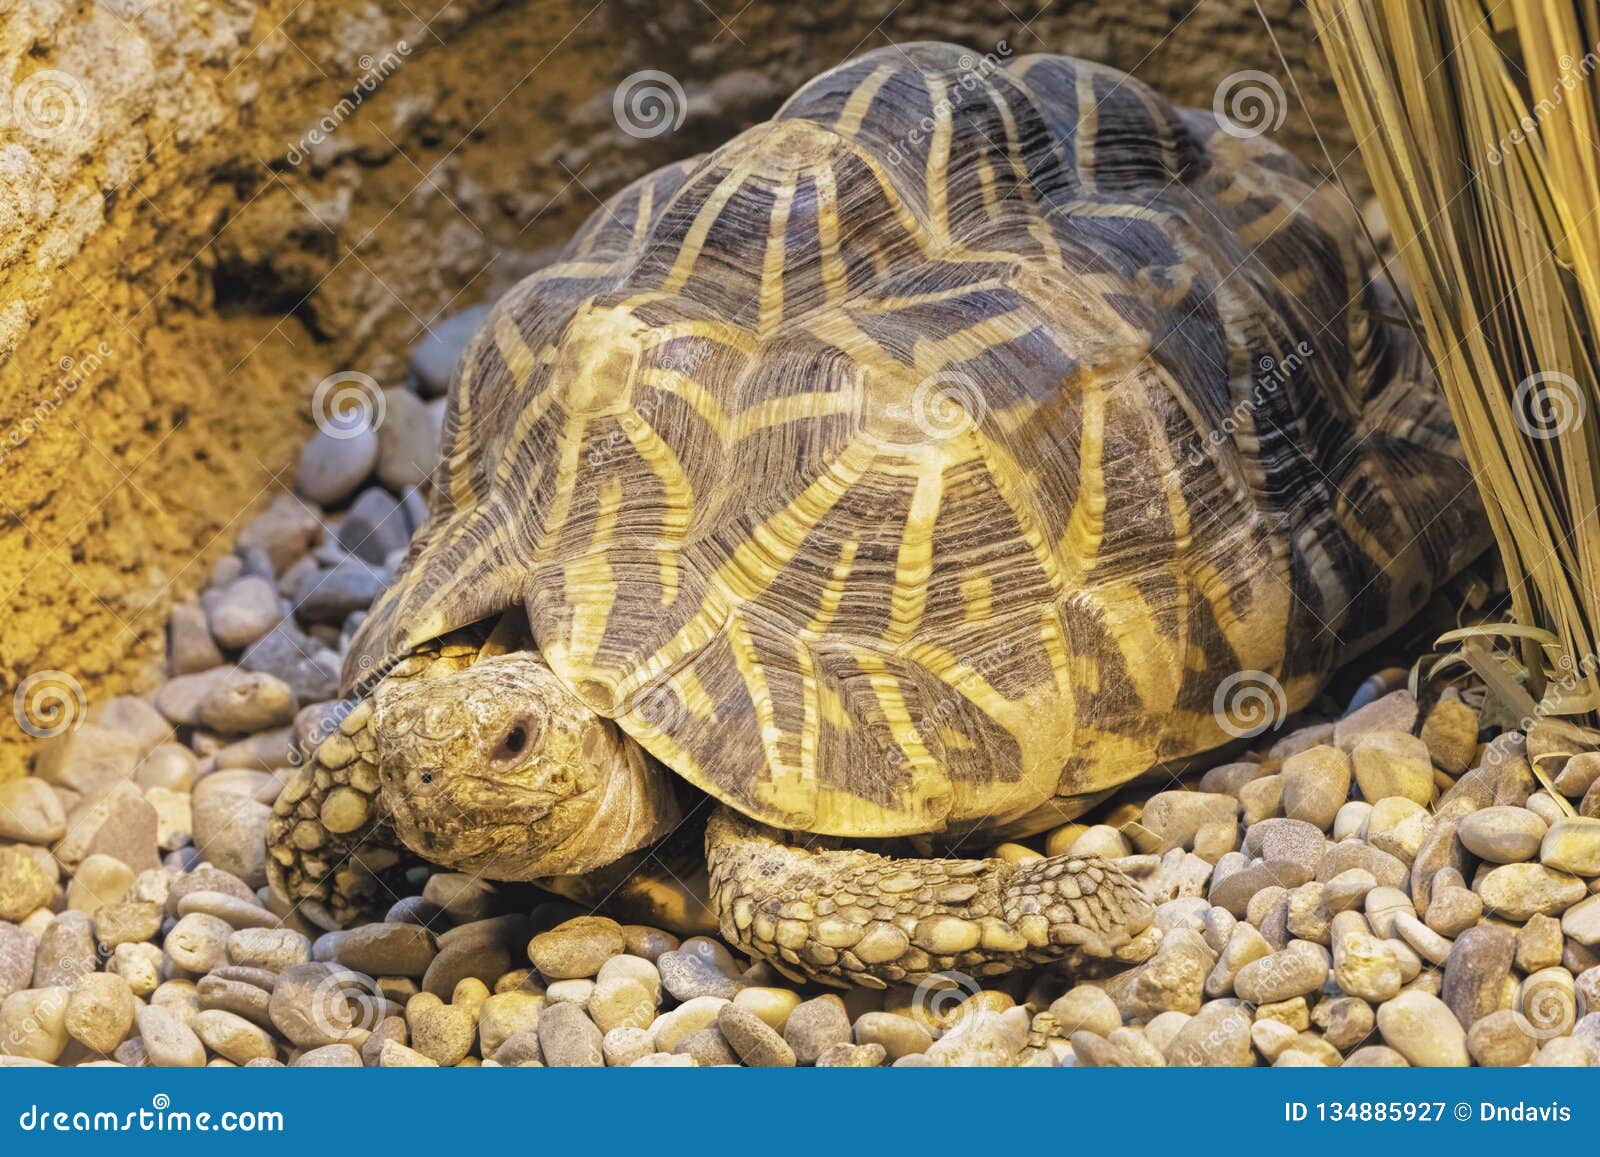 indian star tortoise a threatened tortoise native india, sri lanka